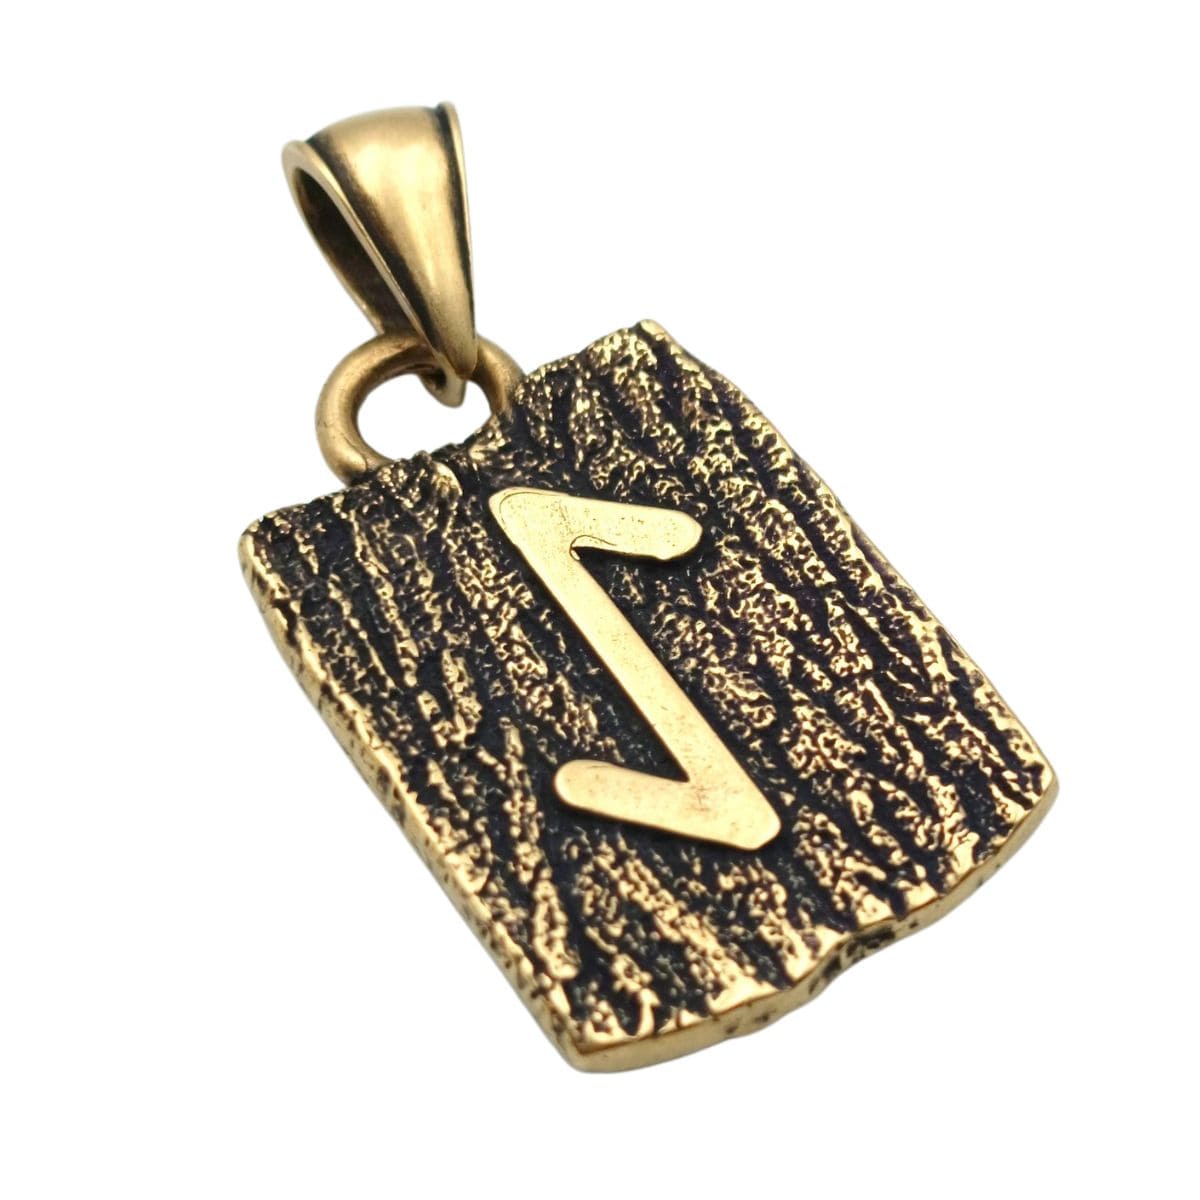 Yggdrasil bronze pendant   